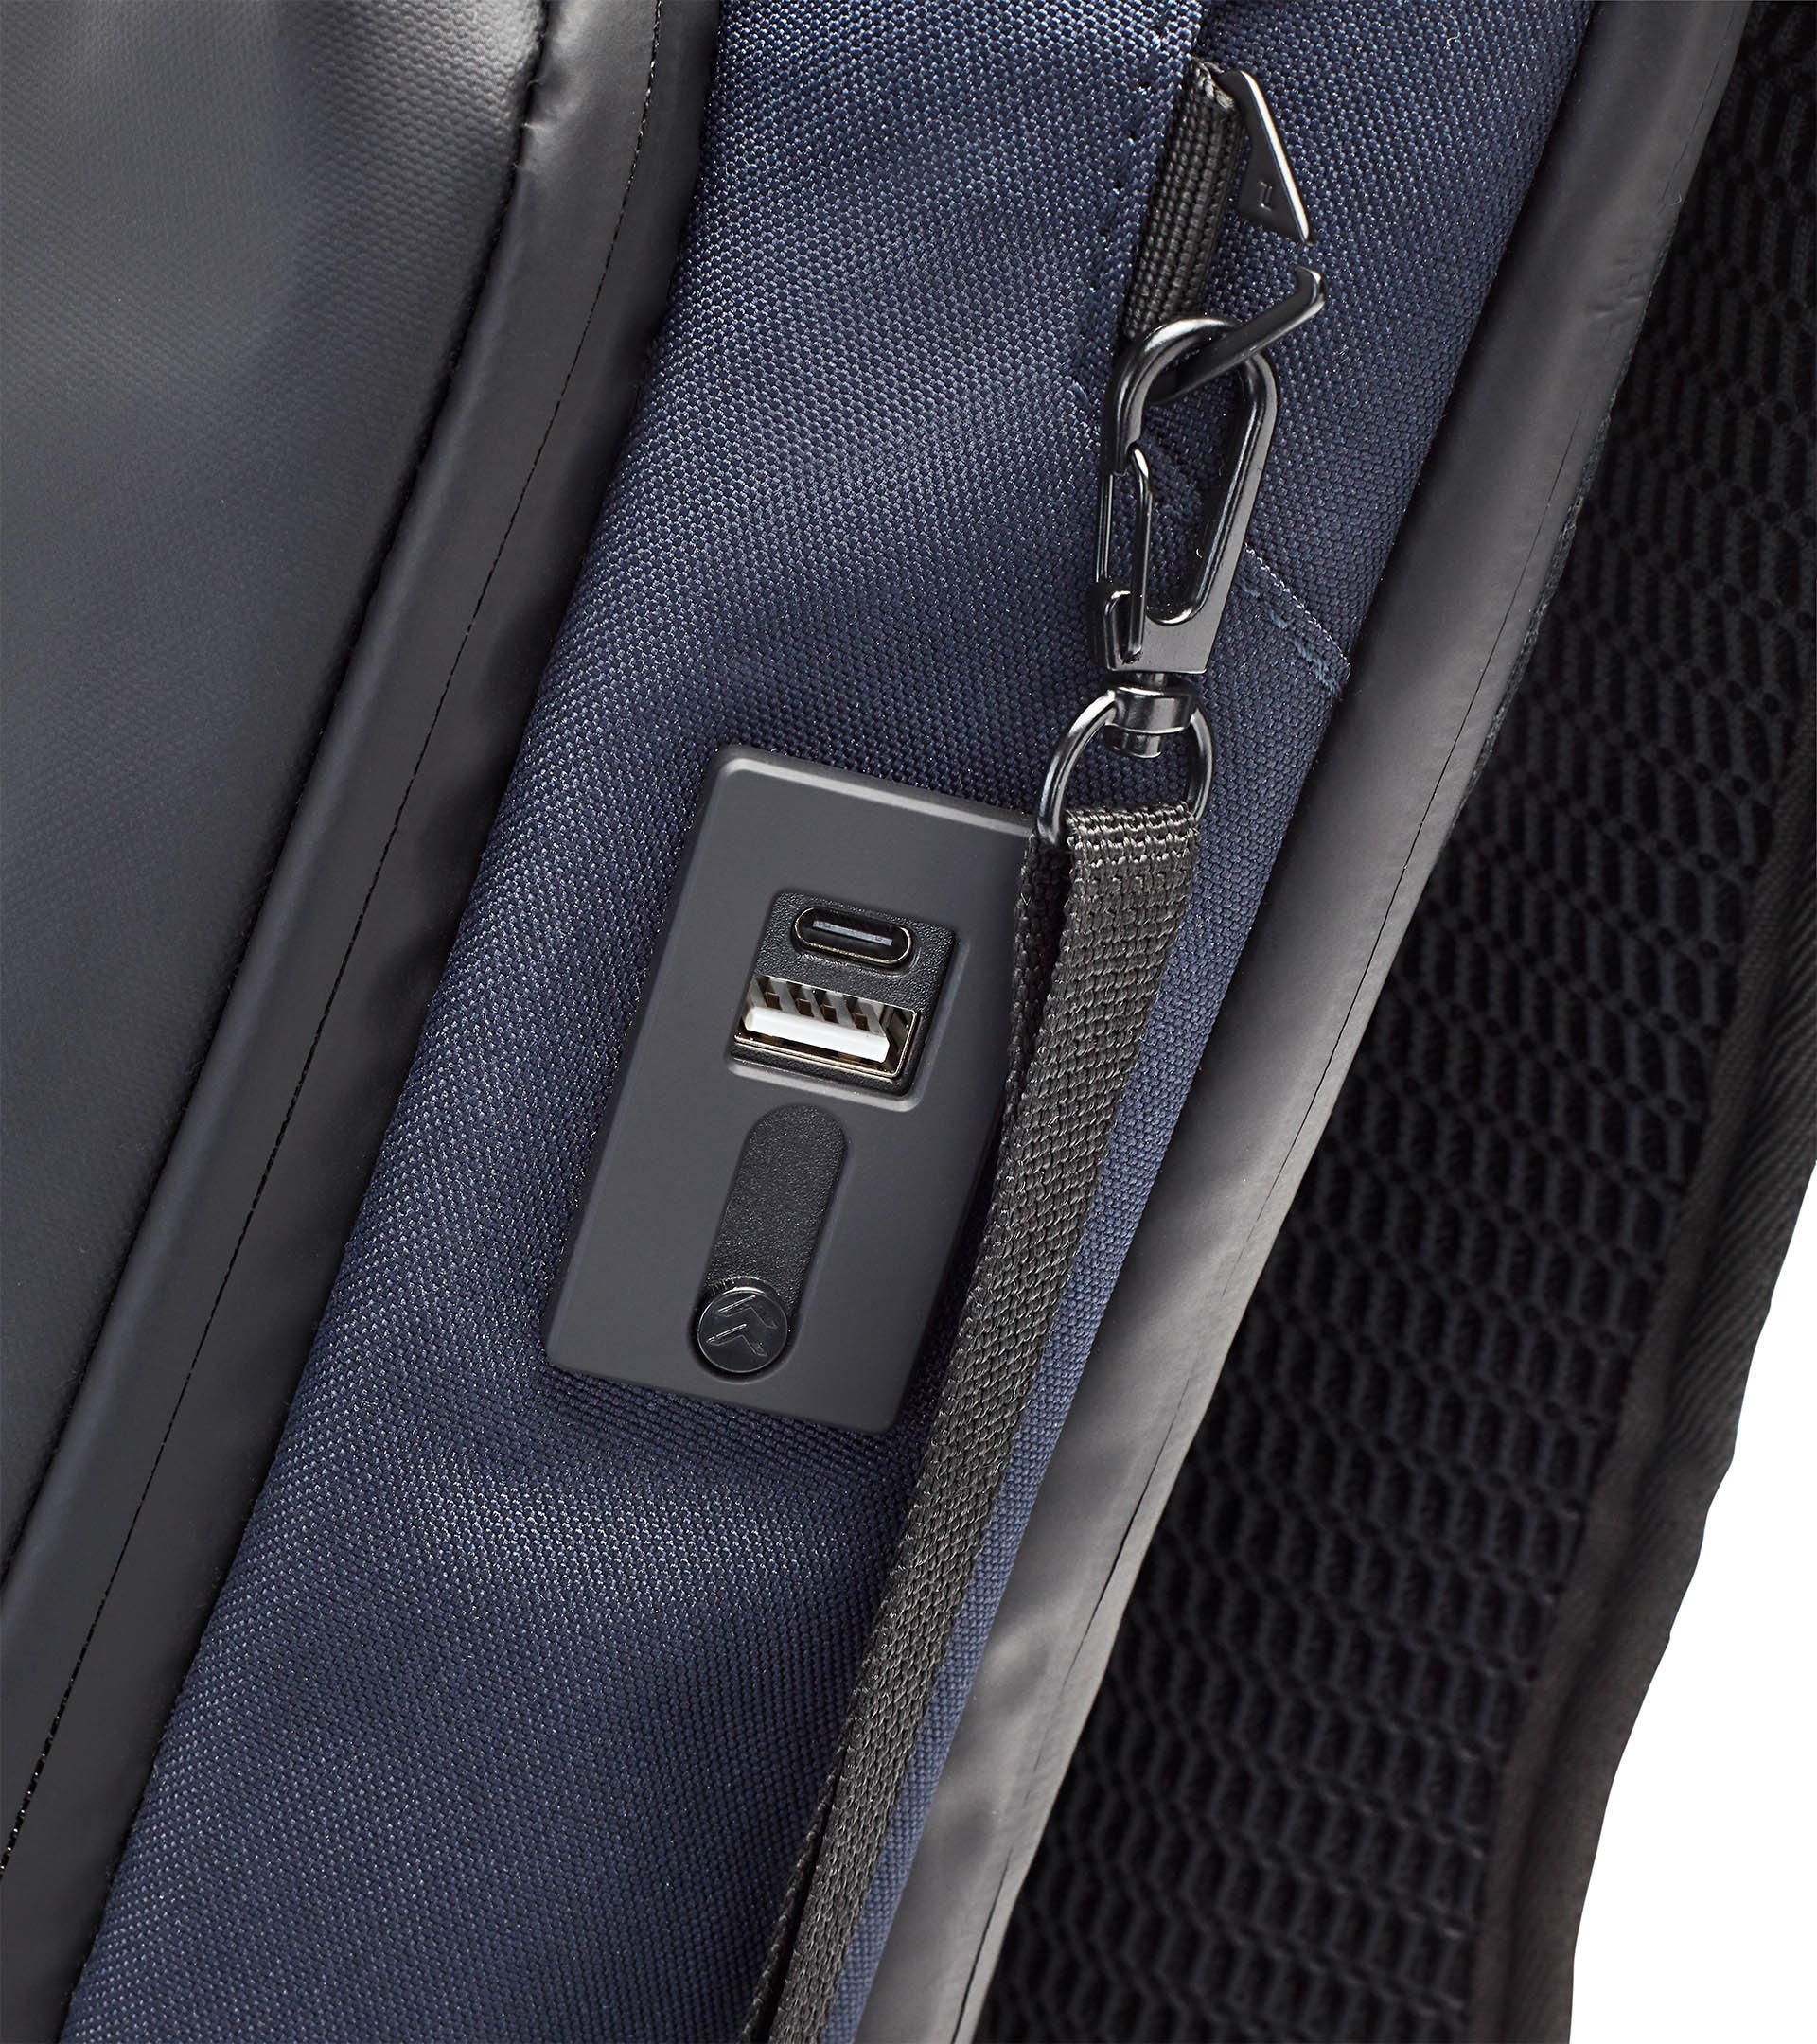 Urban Eco Cycling Backpack - Business Backpack for Men | Porsche Design ...